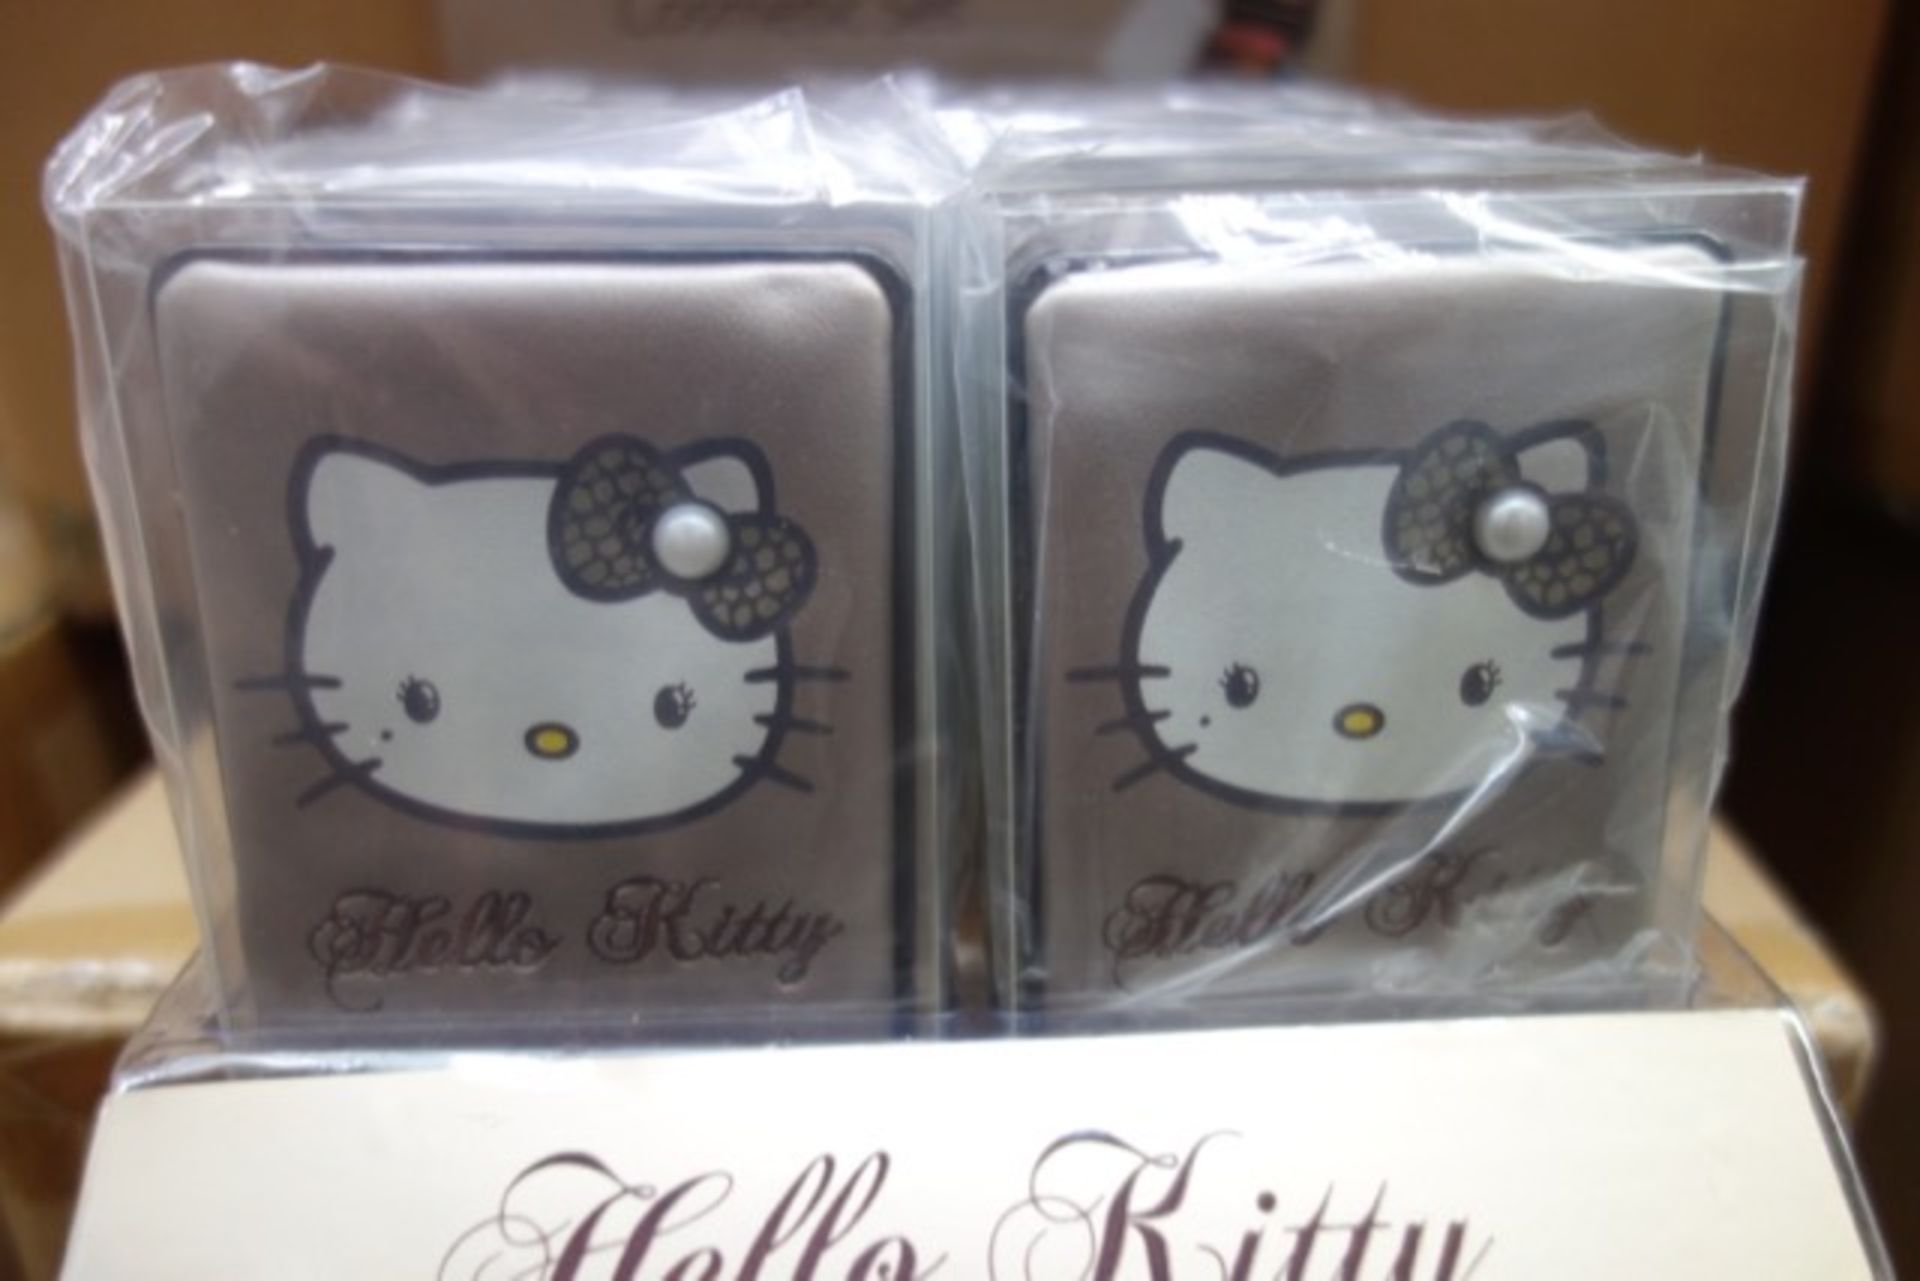 48 x Hello Kitty Cosmetic Sets - Each Set Contains 6 Eyeshadow, 2 Coloured Lip Gloss, 1 Eyebrush, - Image 4 of 5